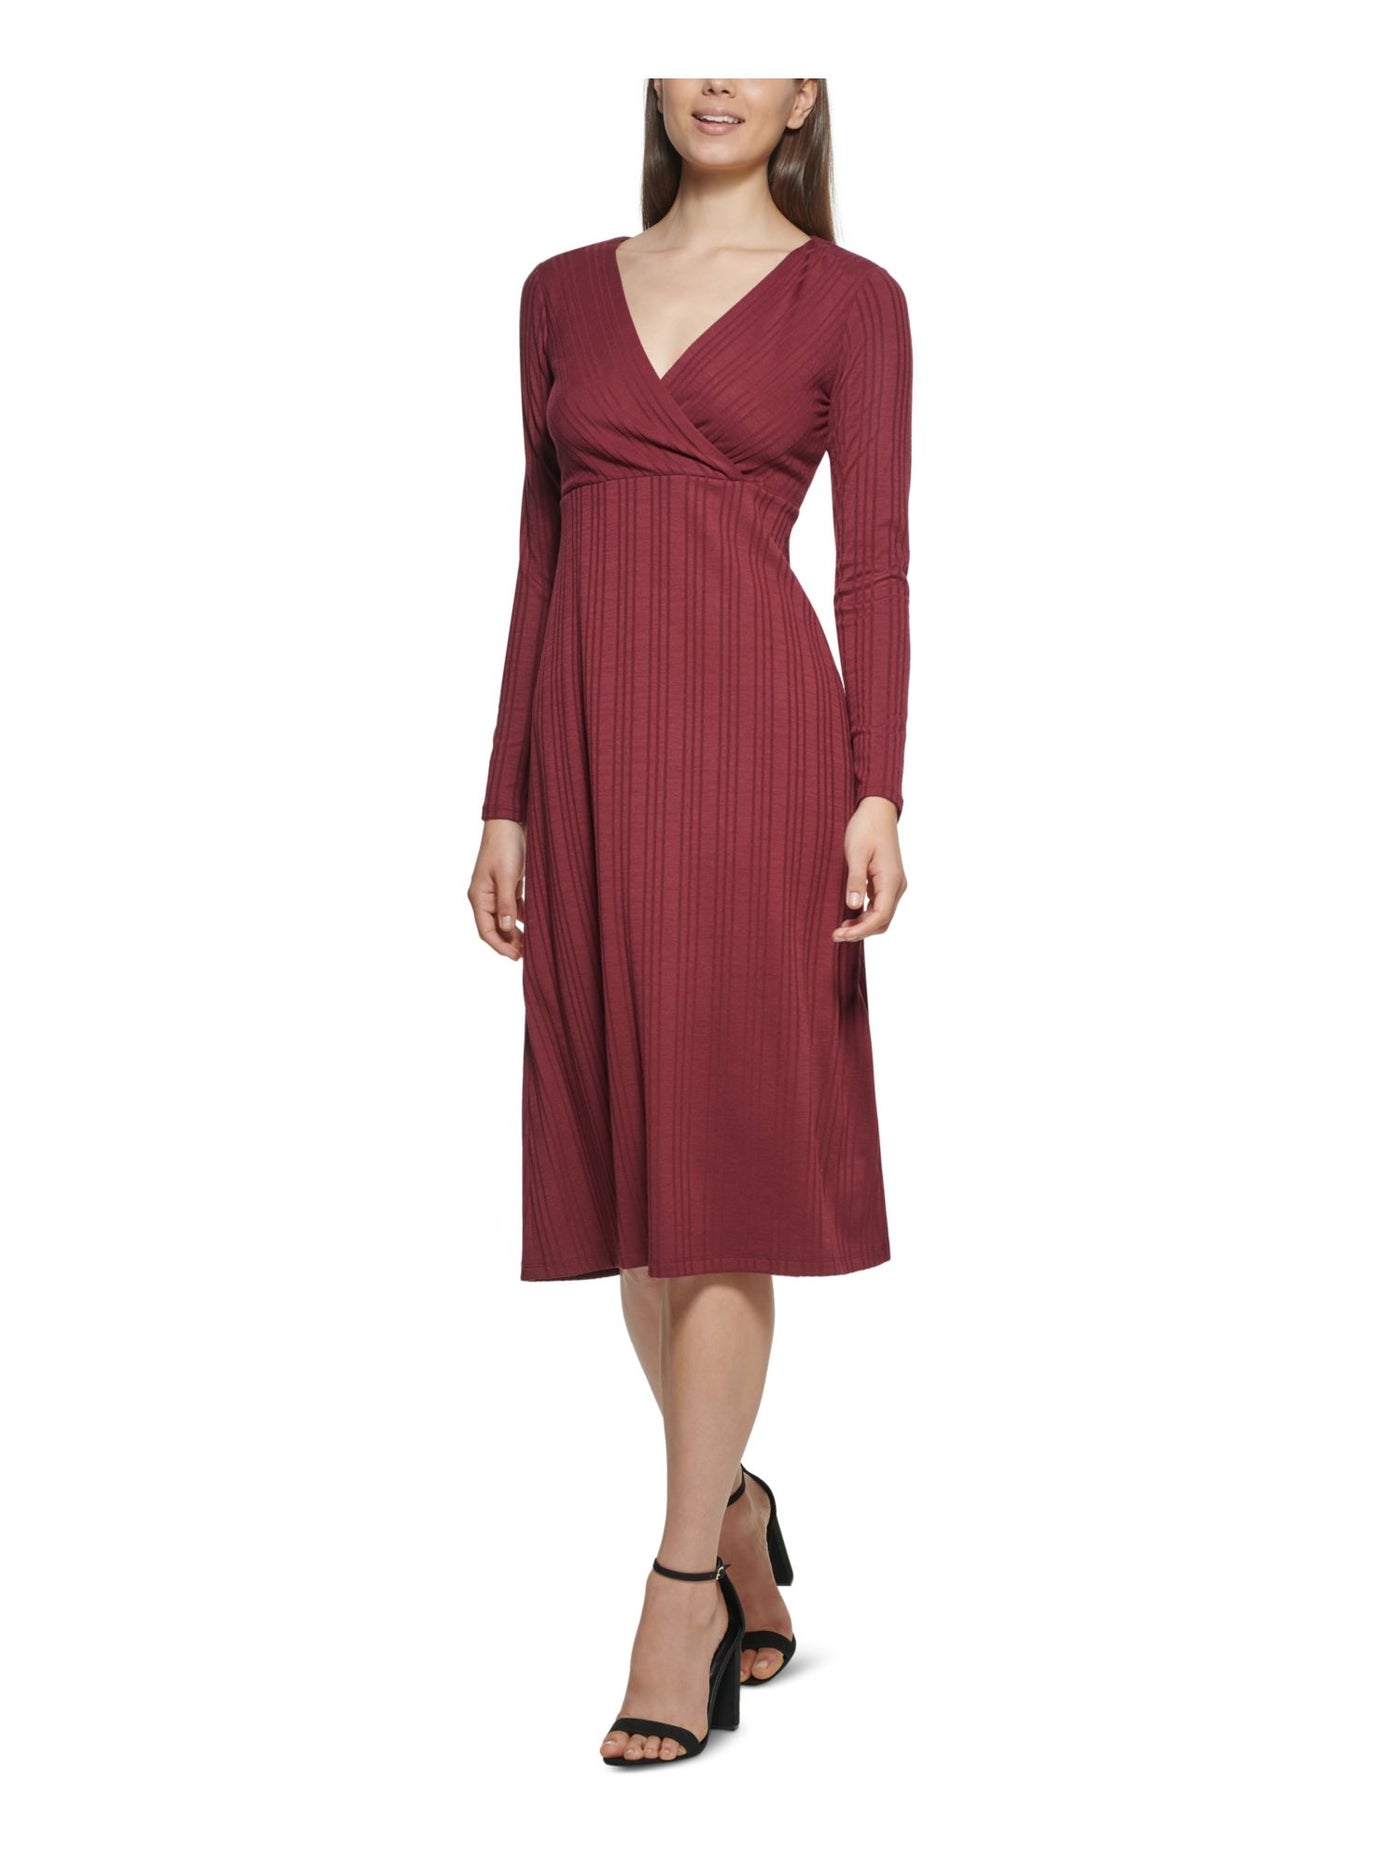 KENSIE DRESSES Womens Maroon Knit Ribbed Lined Pullover Long Sleeve Surplice Neckline Midi Wear To Work Dress M